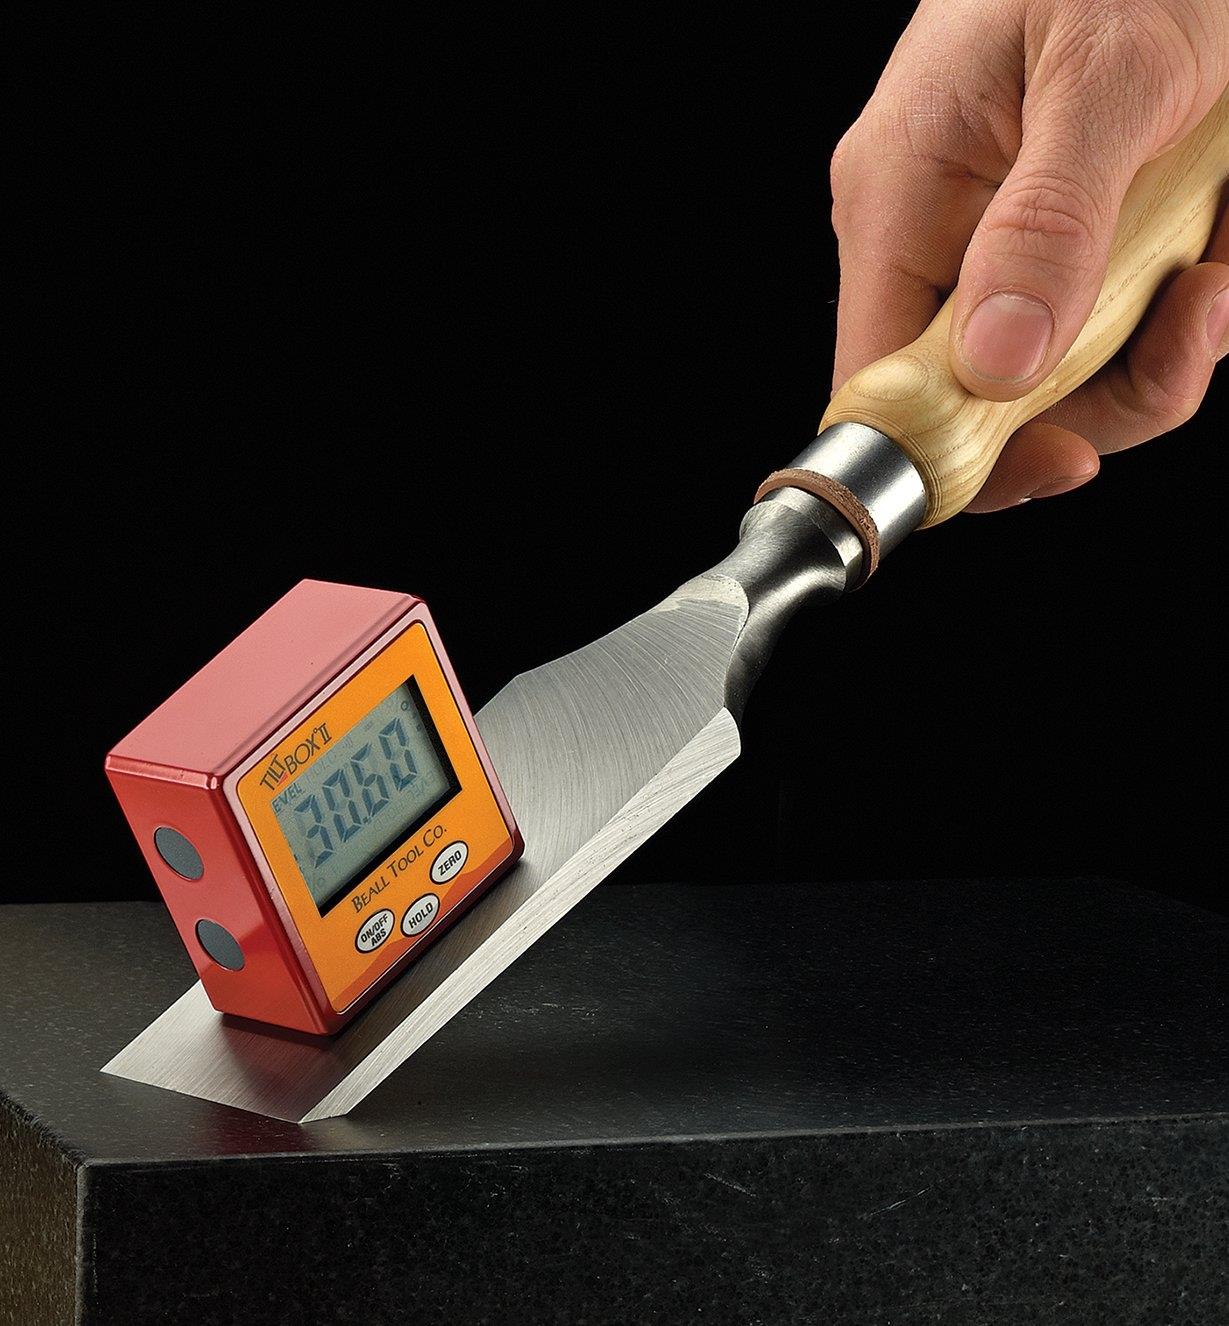 88N9050 - Tilt Box II Digital Inclinometer